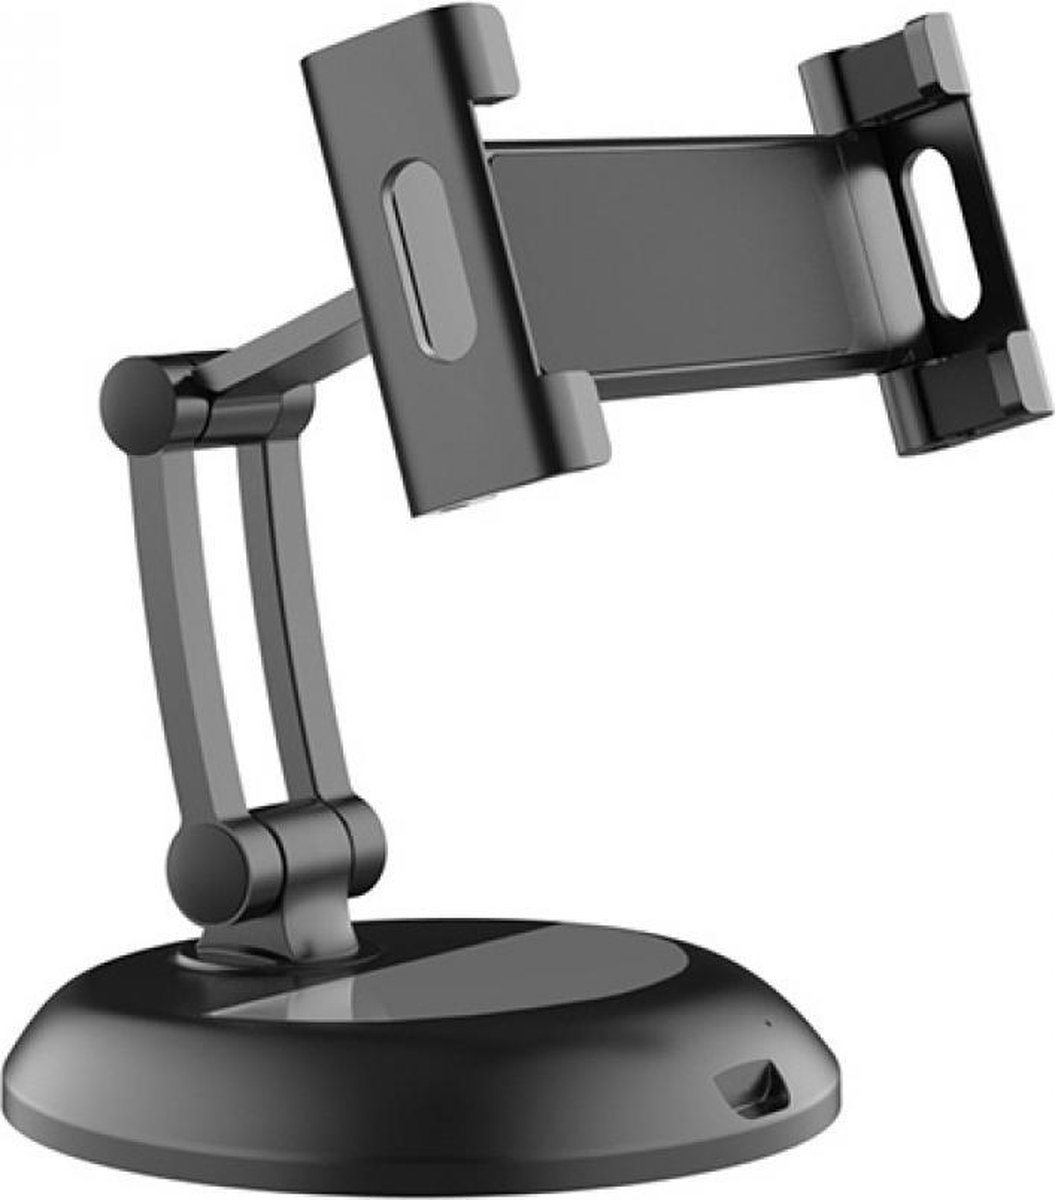 Tablethouder LB465 bureau tablet / iPad / Samsung galaxy tab houder beugel Home verstelbare bureau of tafel standaard - zwart